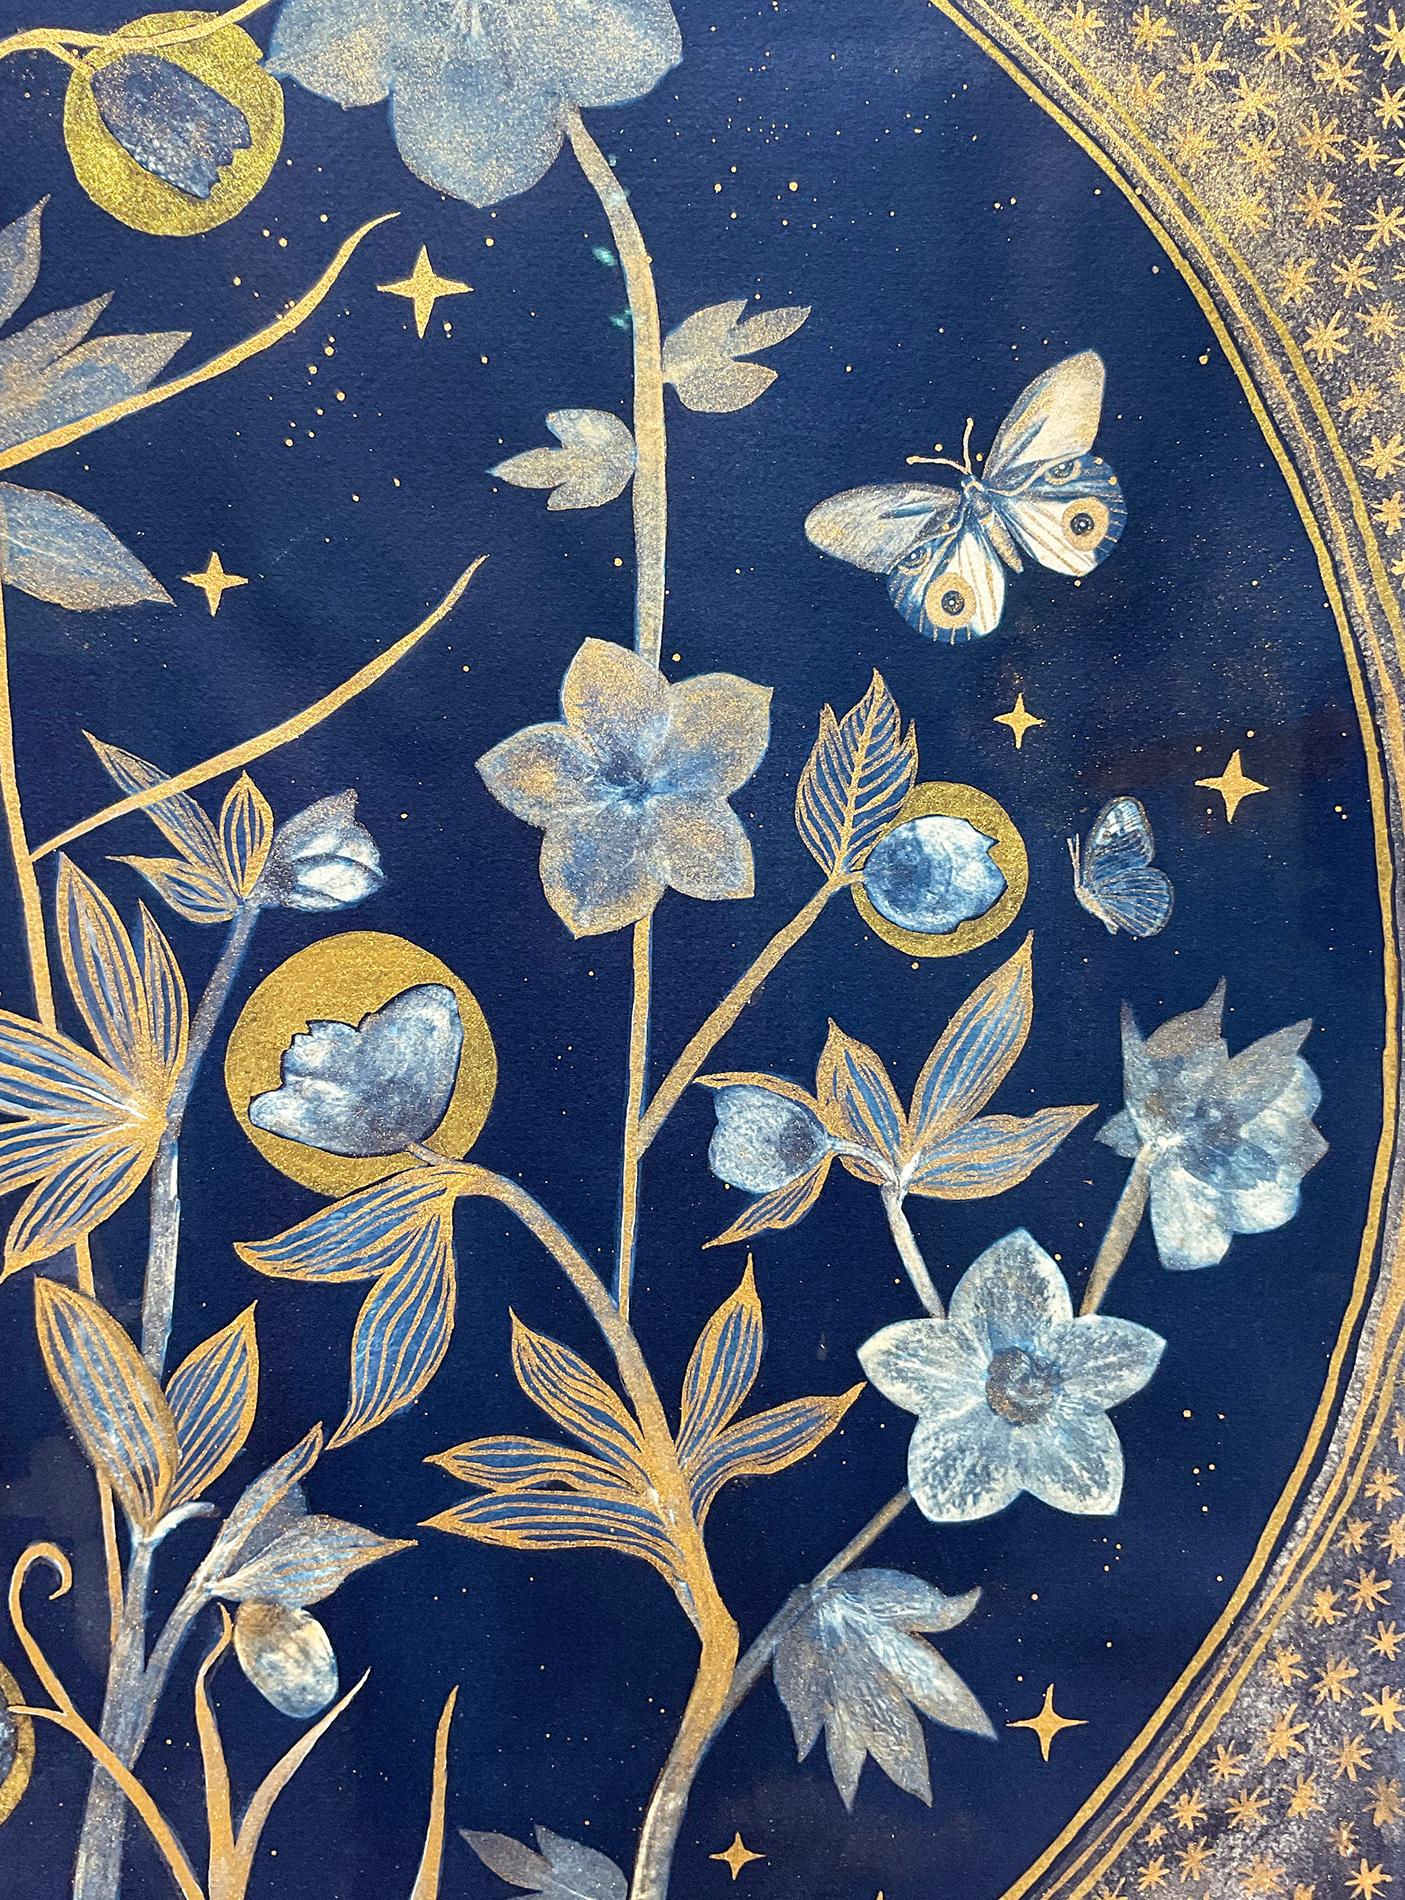 Hellebore, Tondo (Still Life Painting of Gold Flowers on Indigo Blue)  2